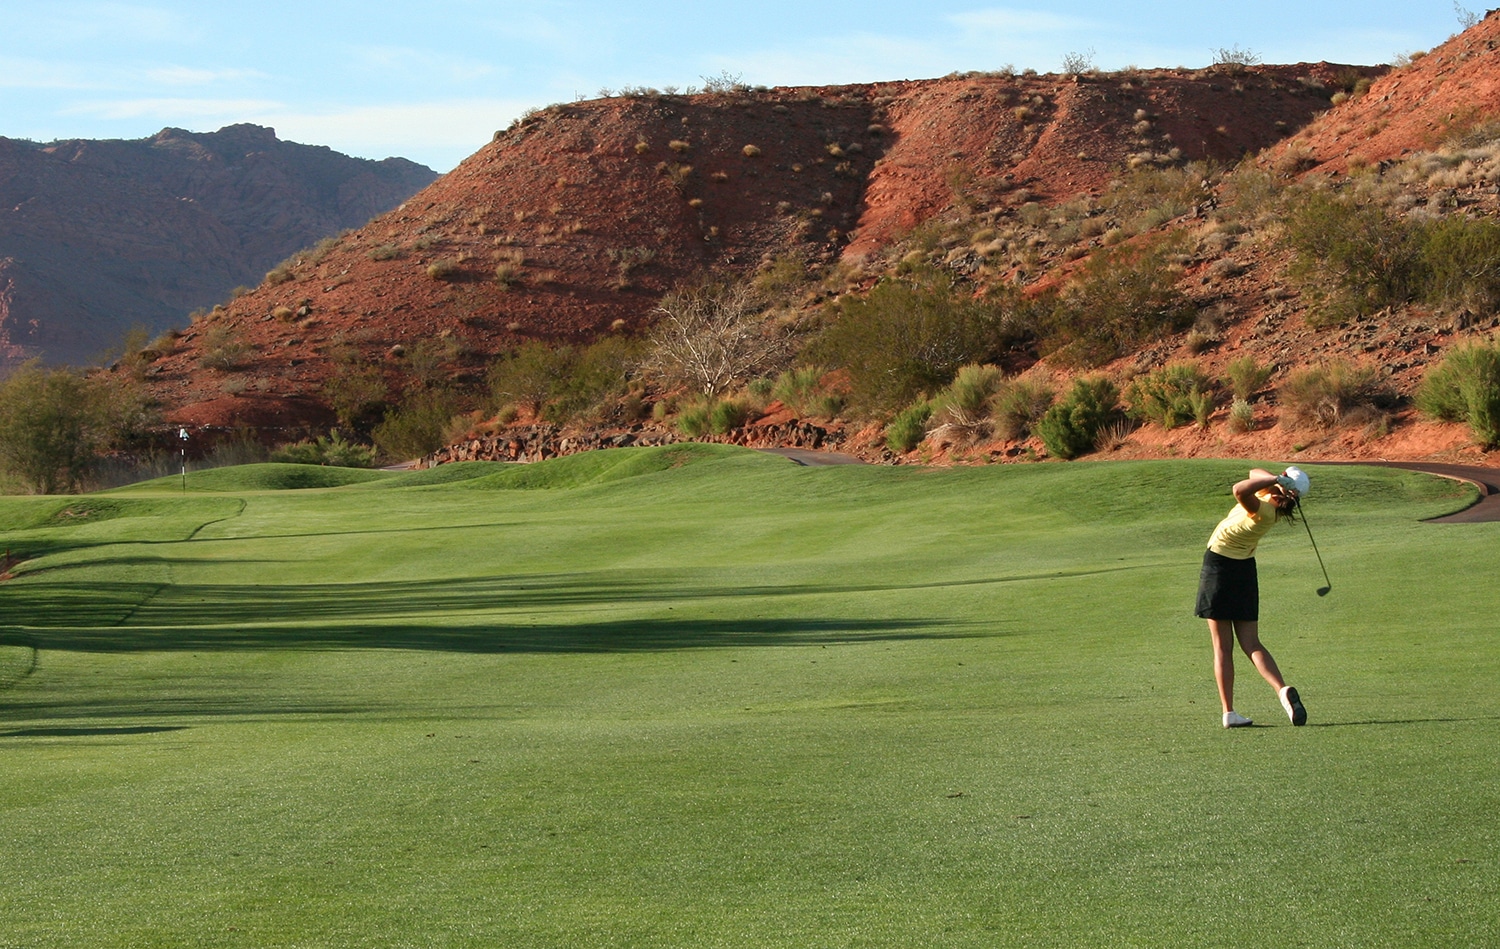 Woman takes a golf shot on desert golf course.